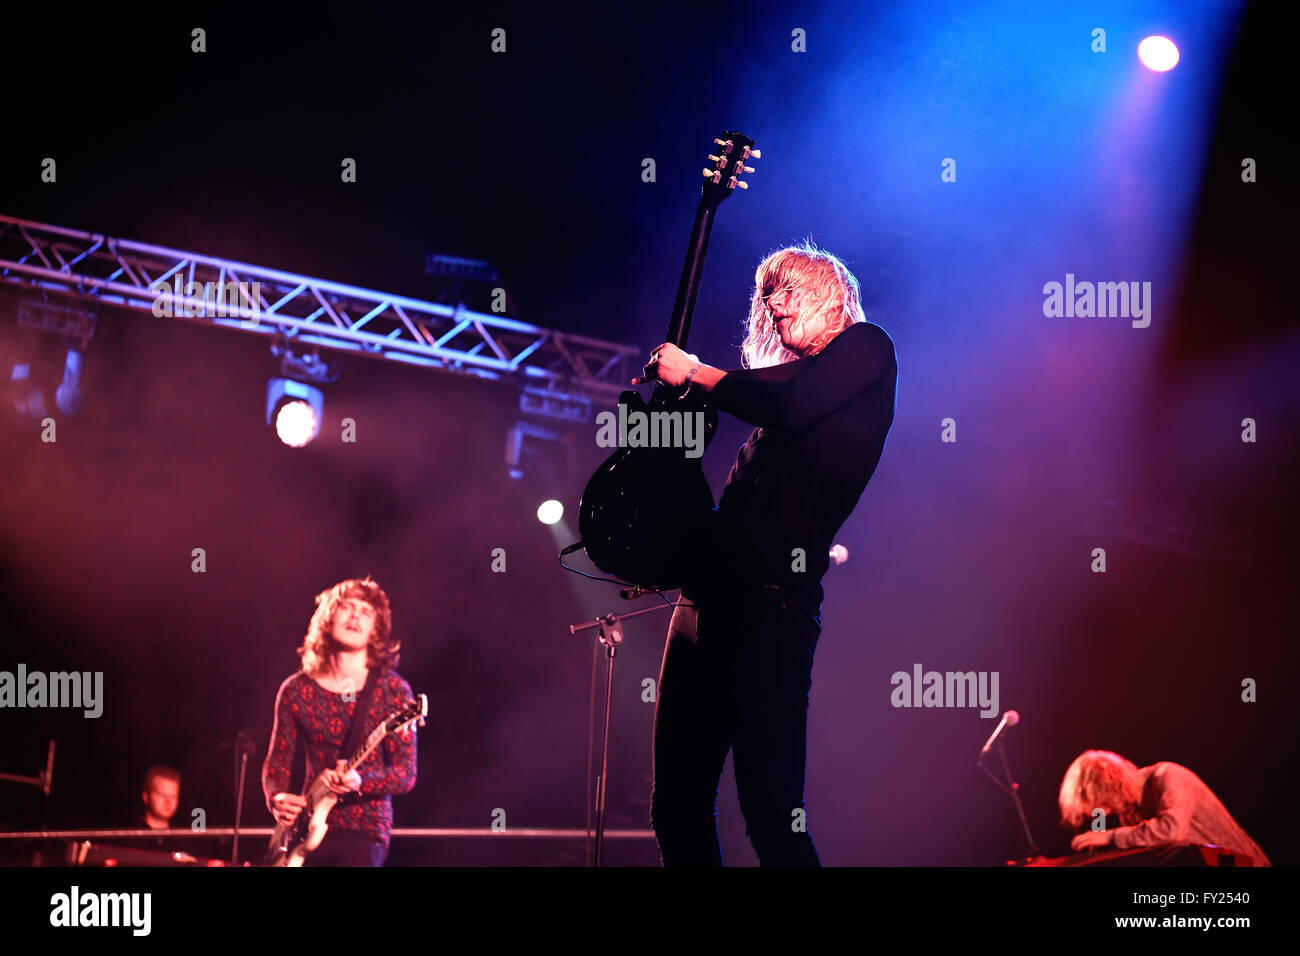 BILBAO, SPAIN - OCT 31: Goo Goo Berlin (band) live performance at Bime Festival on October 31, 2014 in Bilbao, Spain. Stock Photo